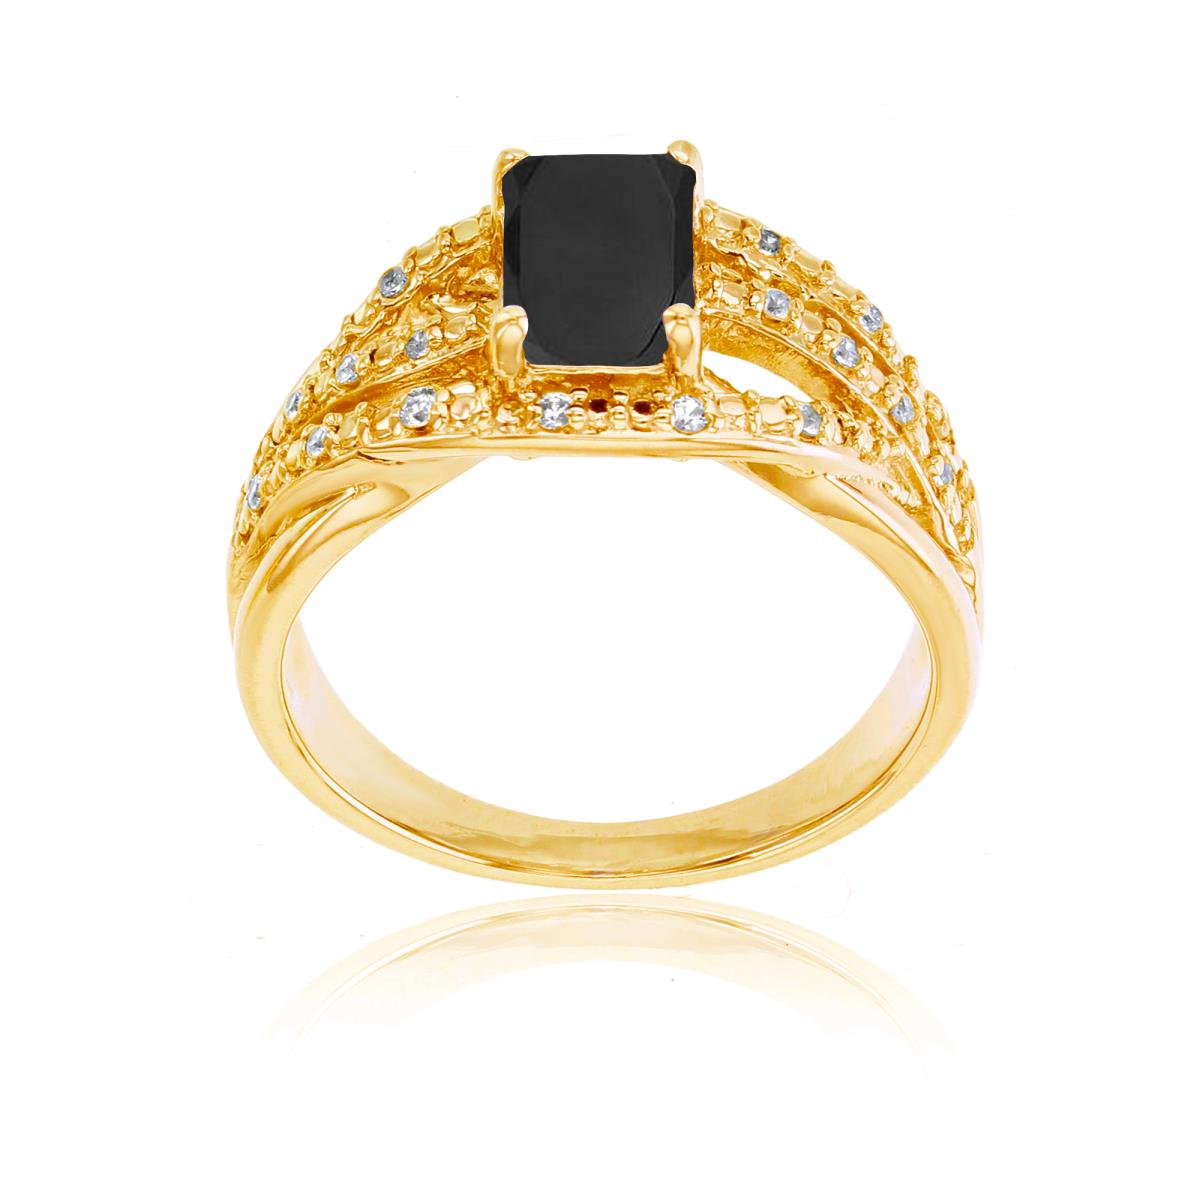 10K Yellow Gold 0.10 CTTW Rnd Diamond & 7x5mm Oct Onyx Ring